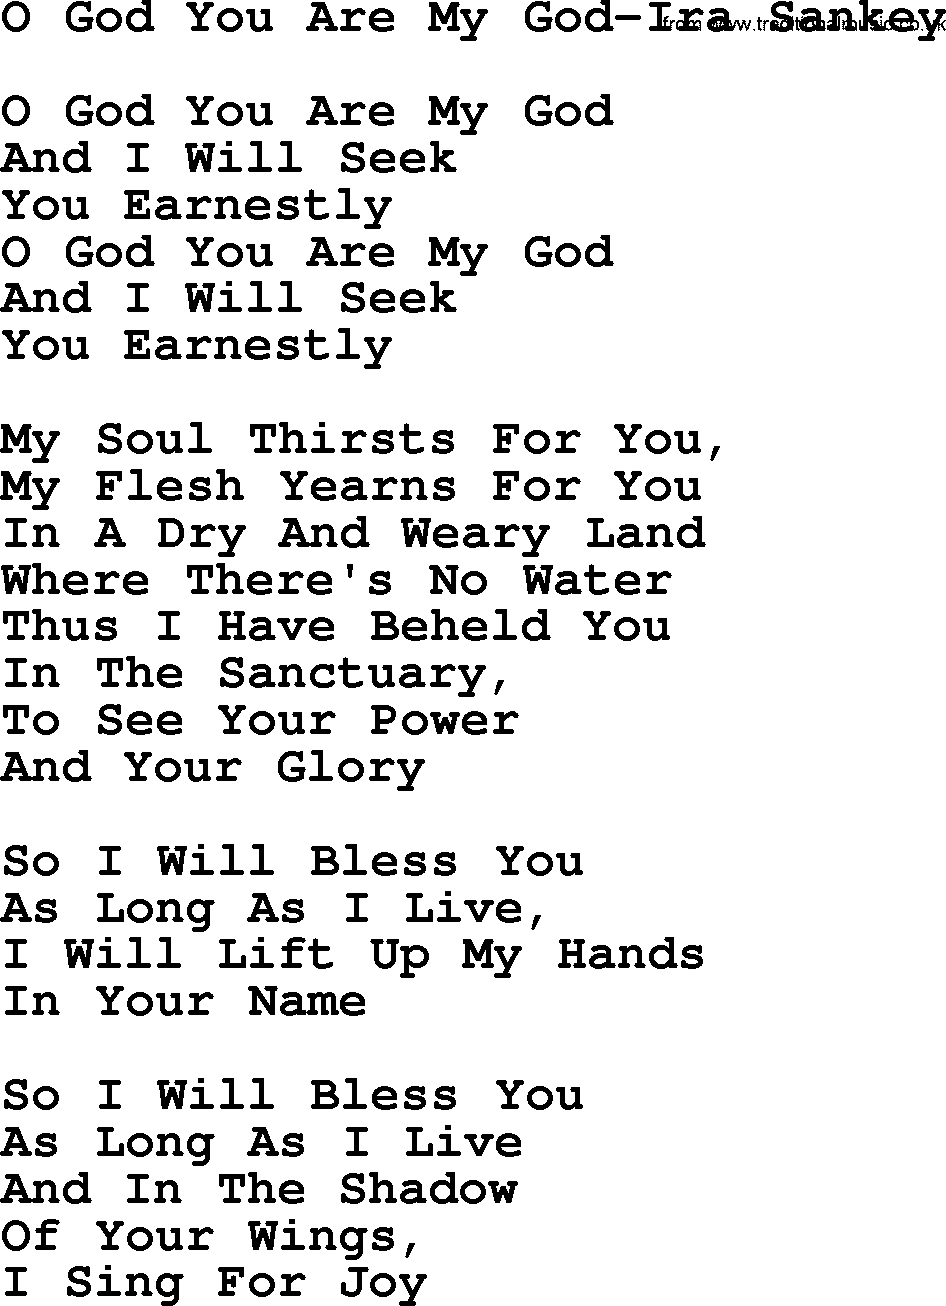 Ira Sankey hymn: O God You Are My God-Ira Sankey, lyrics